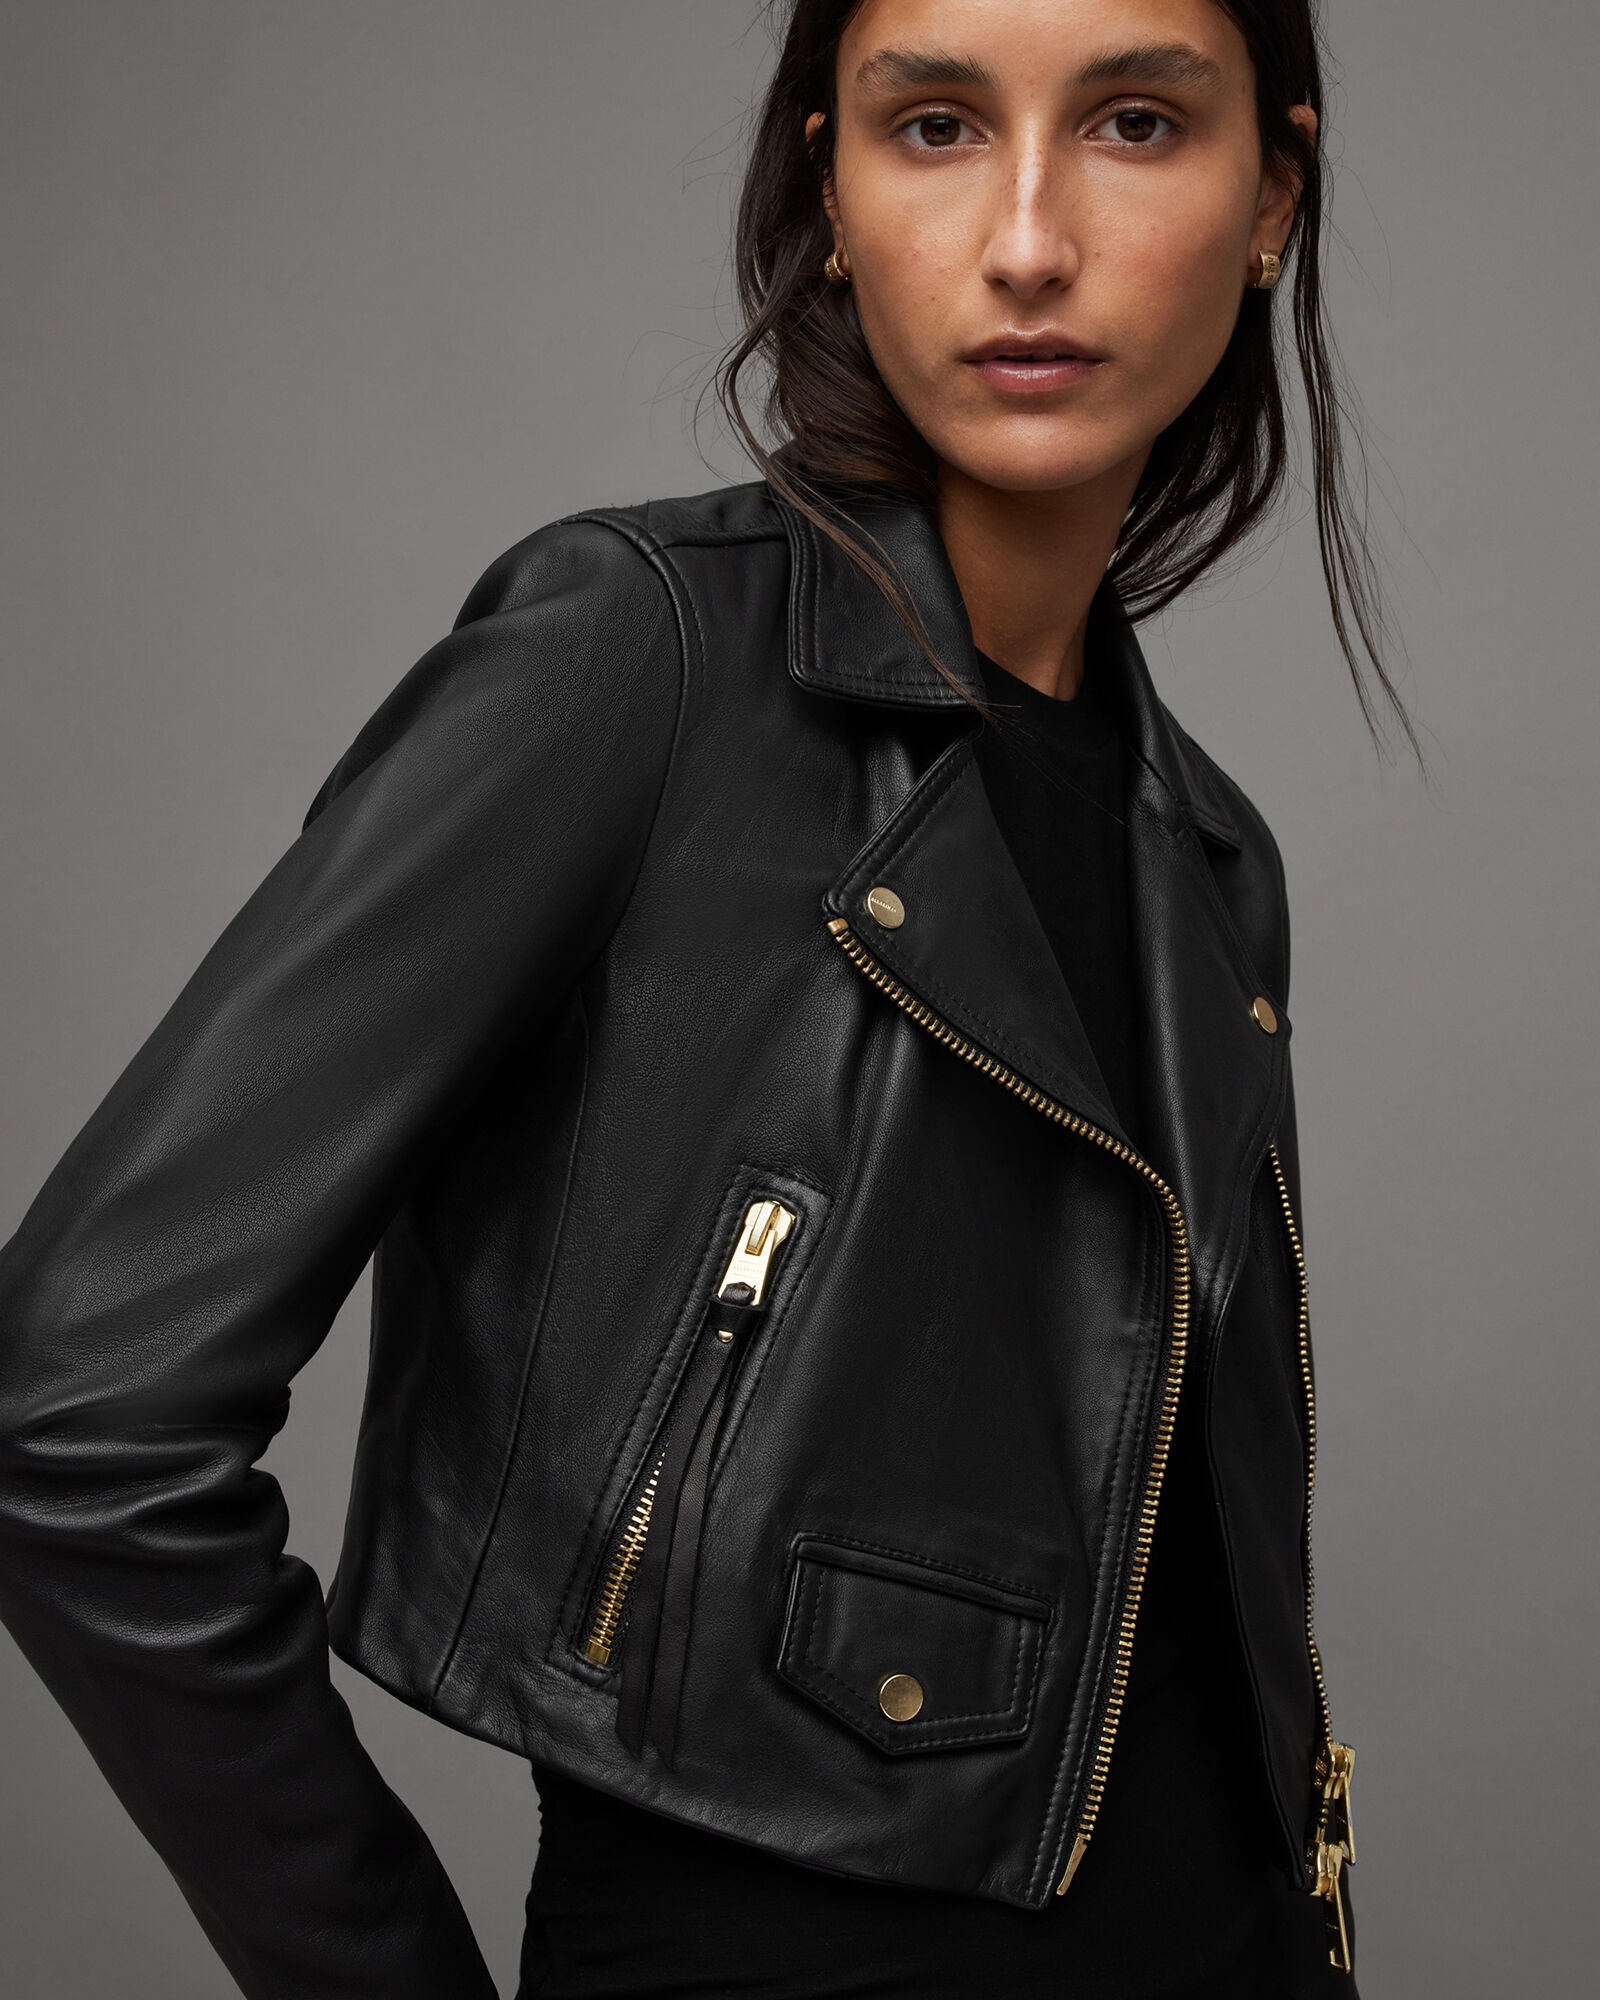 Ladies Textile & Leather Motorcycle Jackets – LadyBiker Limited